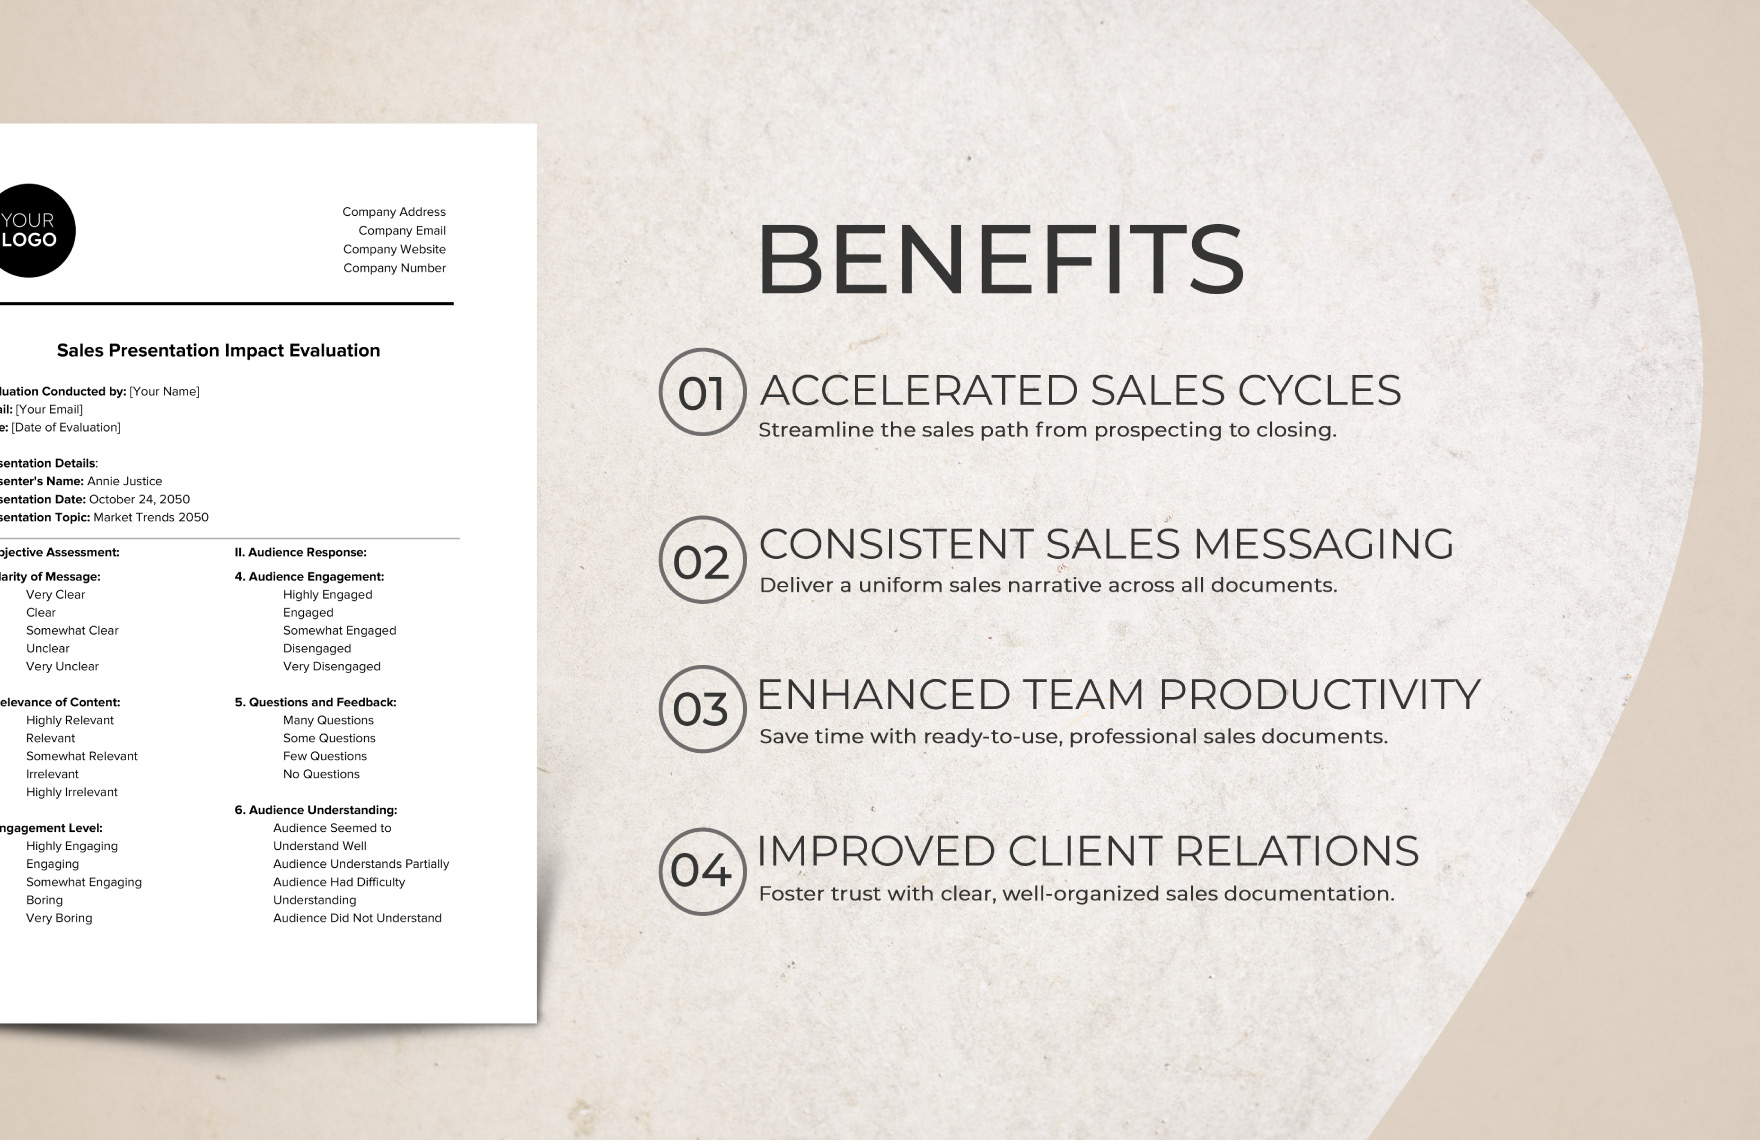 Sales Presentation Impact Evaluation Template